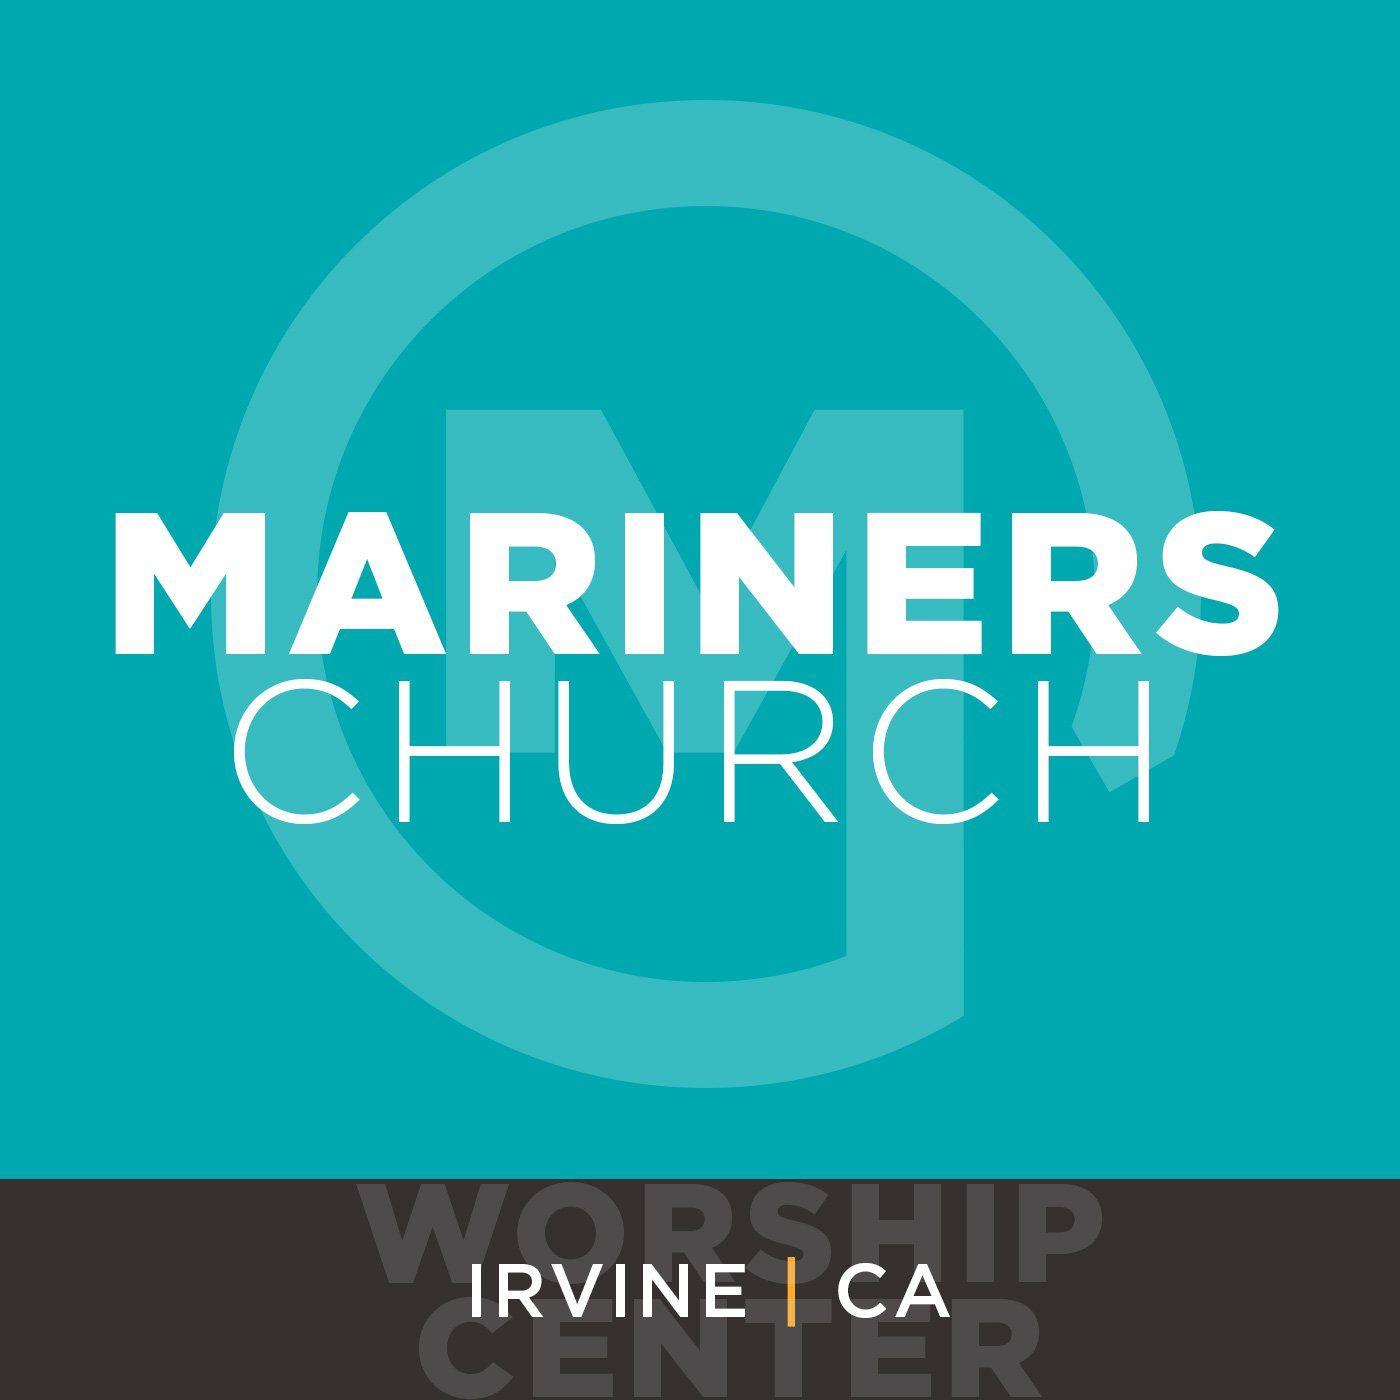 Irvine Logo - pod. fanatic. Podcast: Mariners Church Irvine